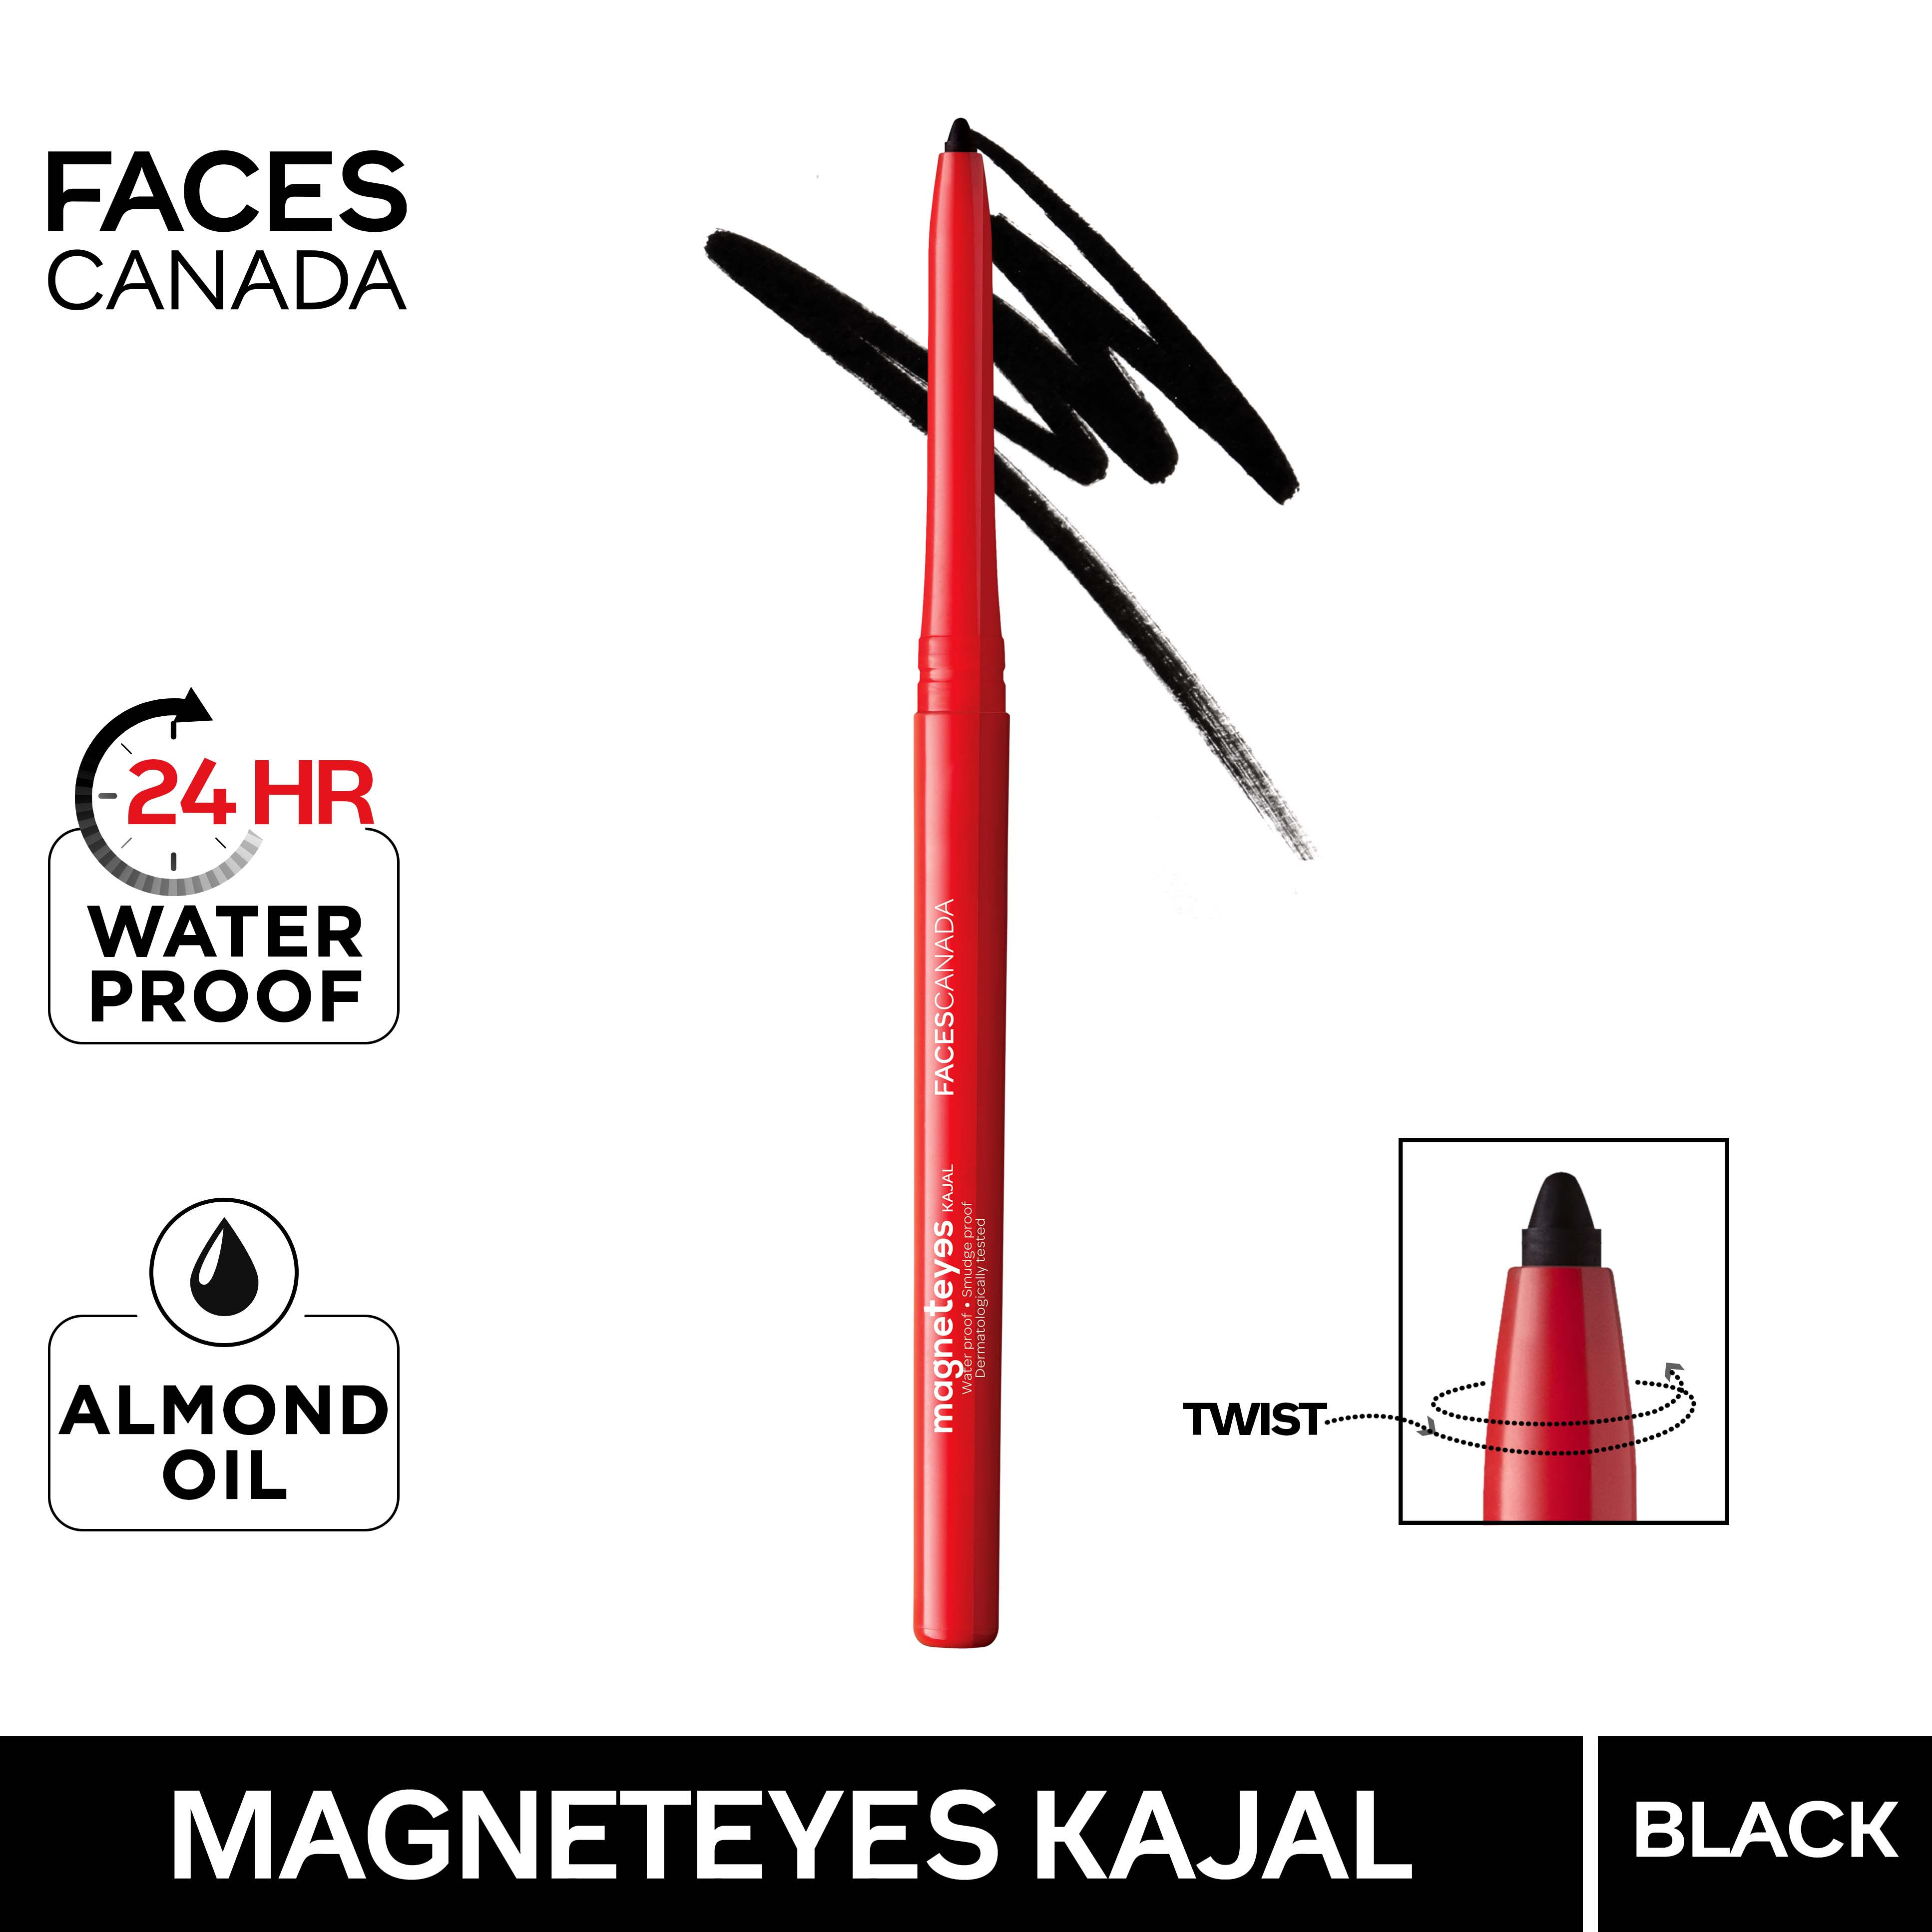 Faces Canada Magneteyes Kajal - Deep Black